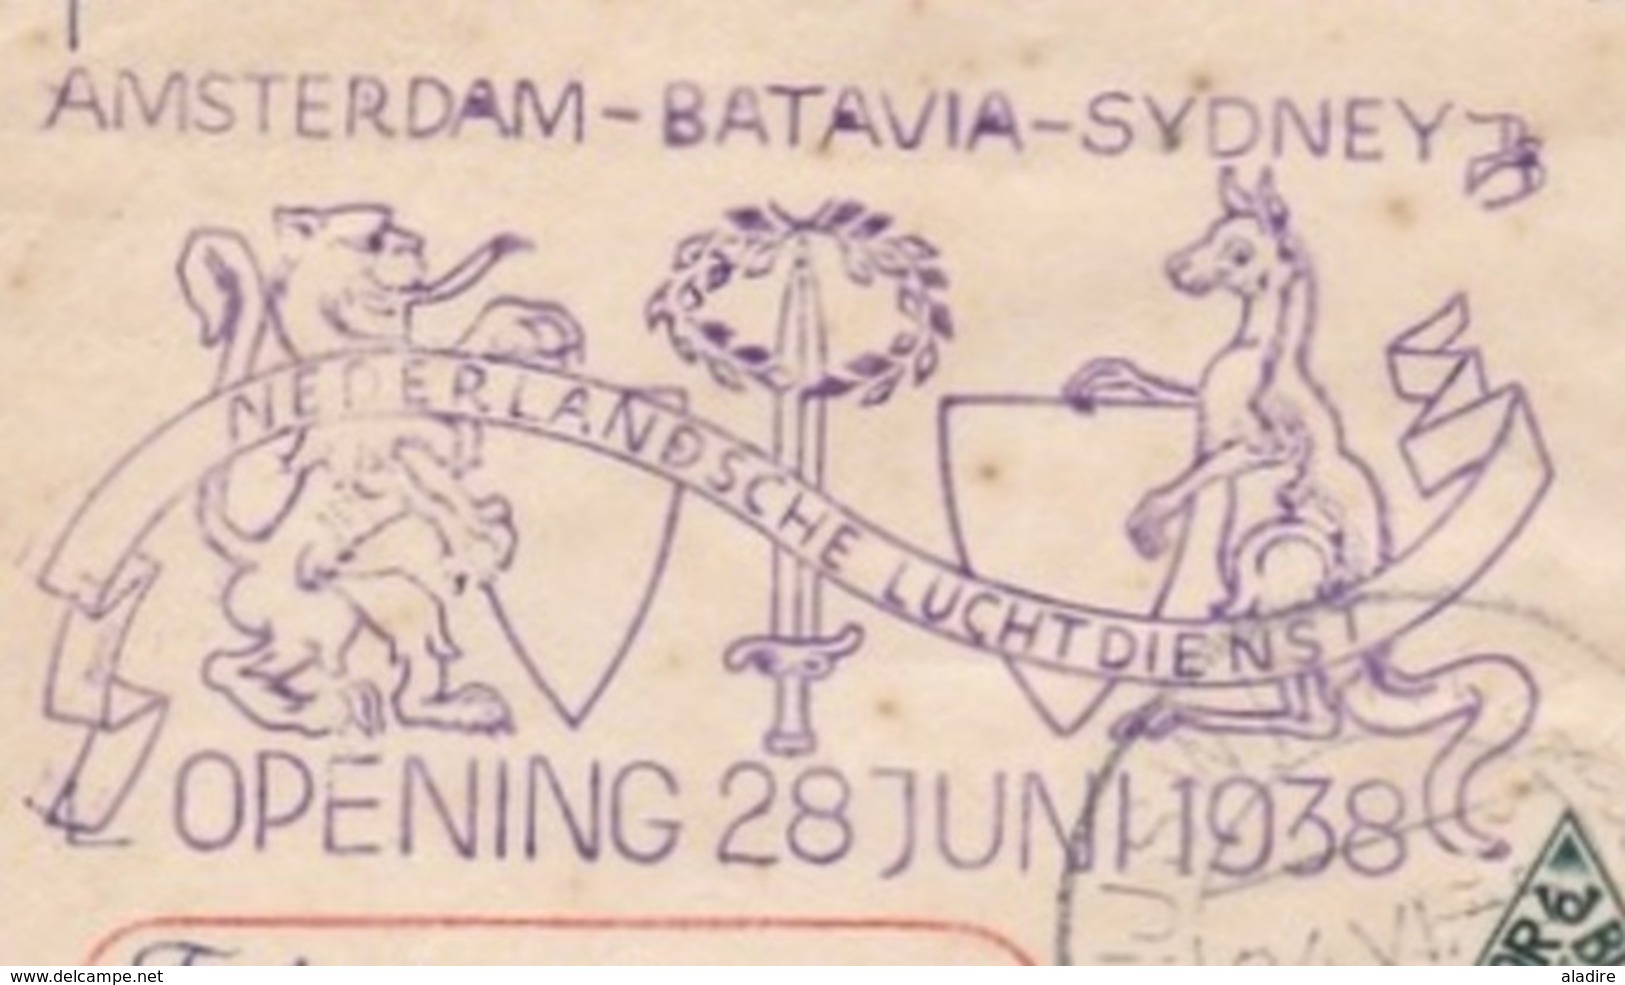 1938 - Raid Aéropostal Amsterdam, Hollande-Batavia, Djakarta, Indonésie - Sydney, Australie ET RETOUR !!! - Posta Aerea